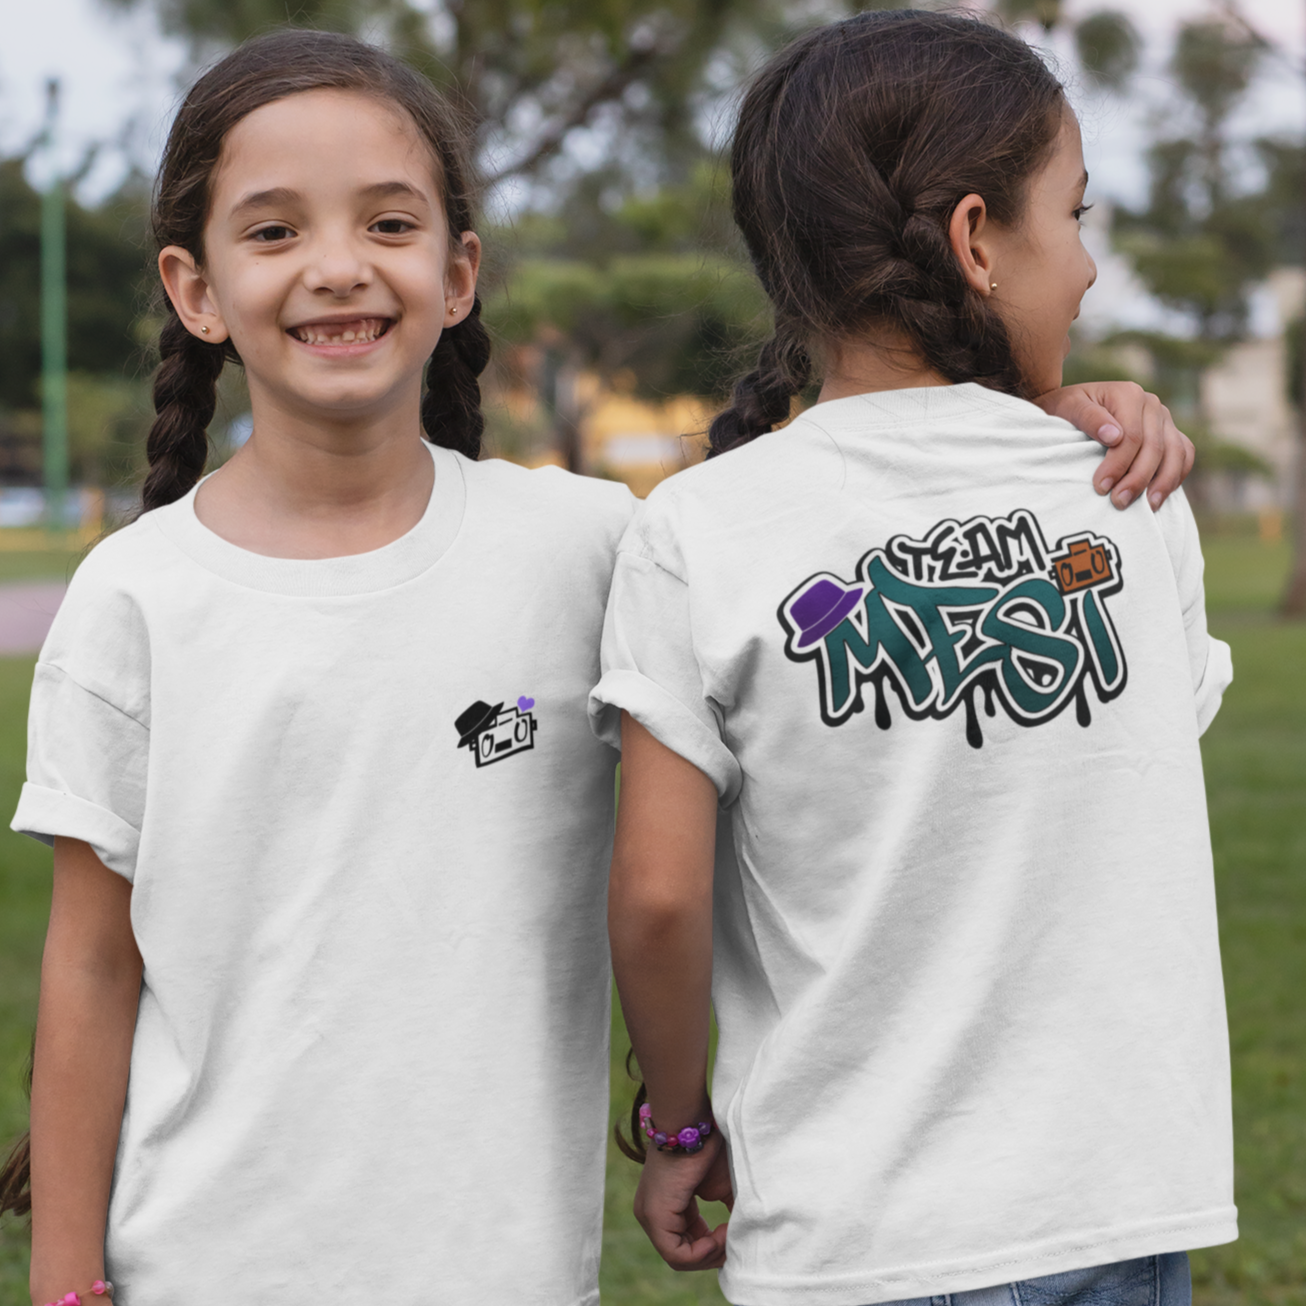 Team Mesi Youth Logo/Graffiti Short Sleeve Tee